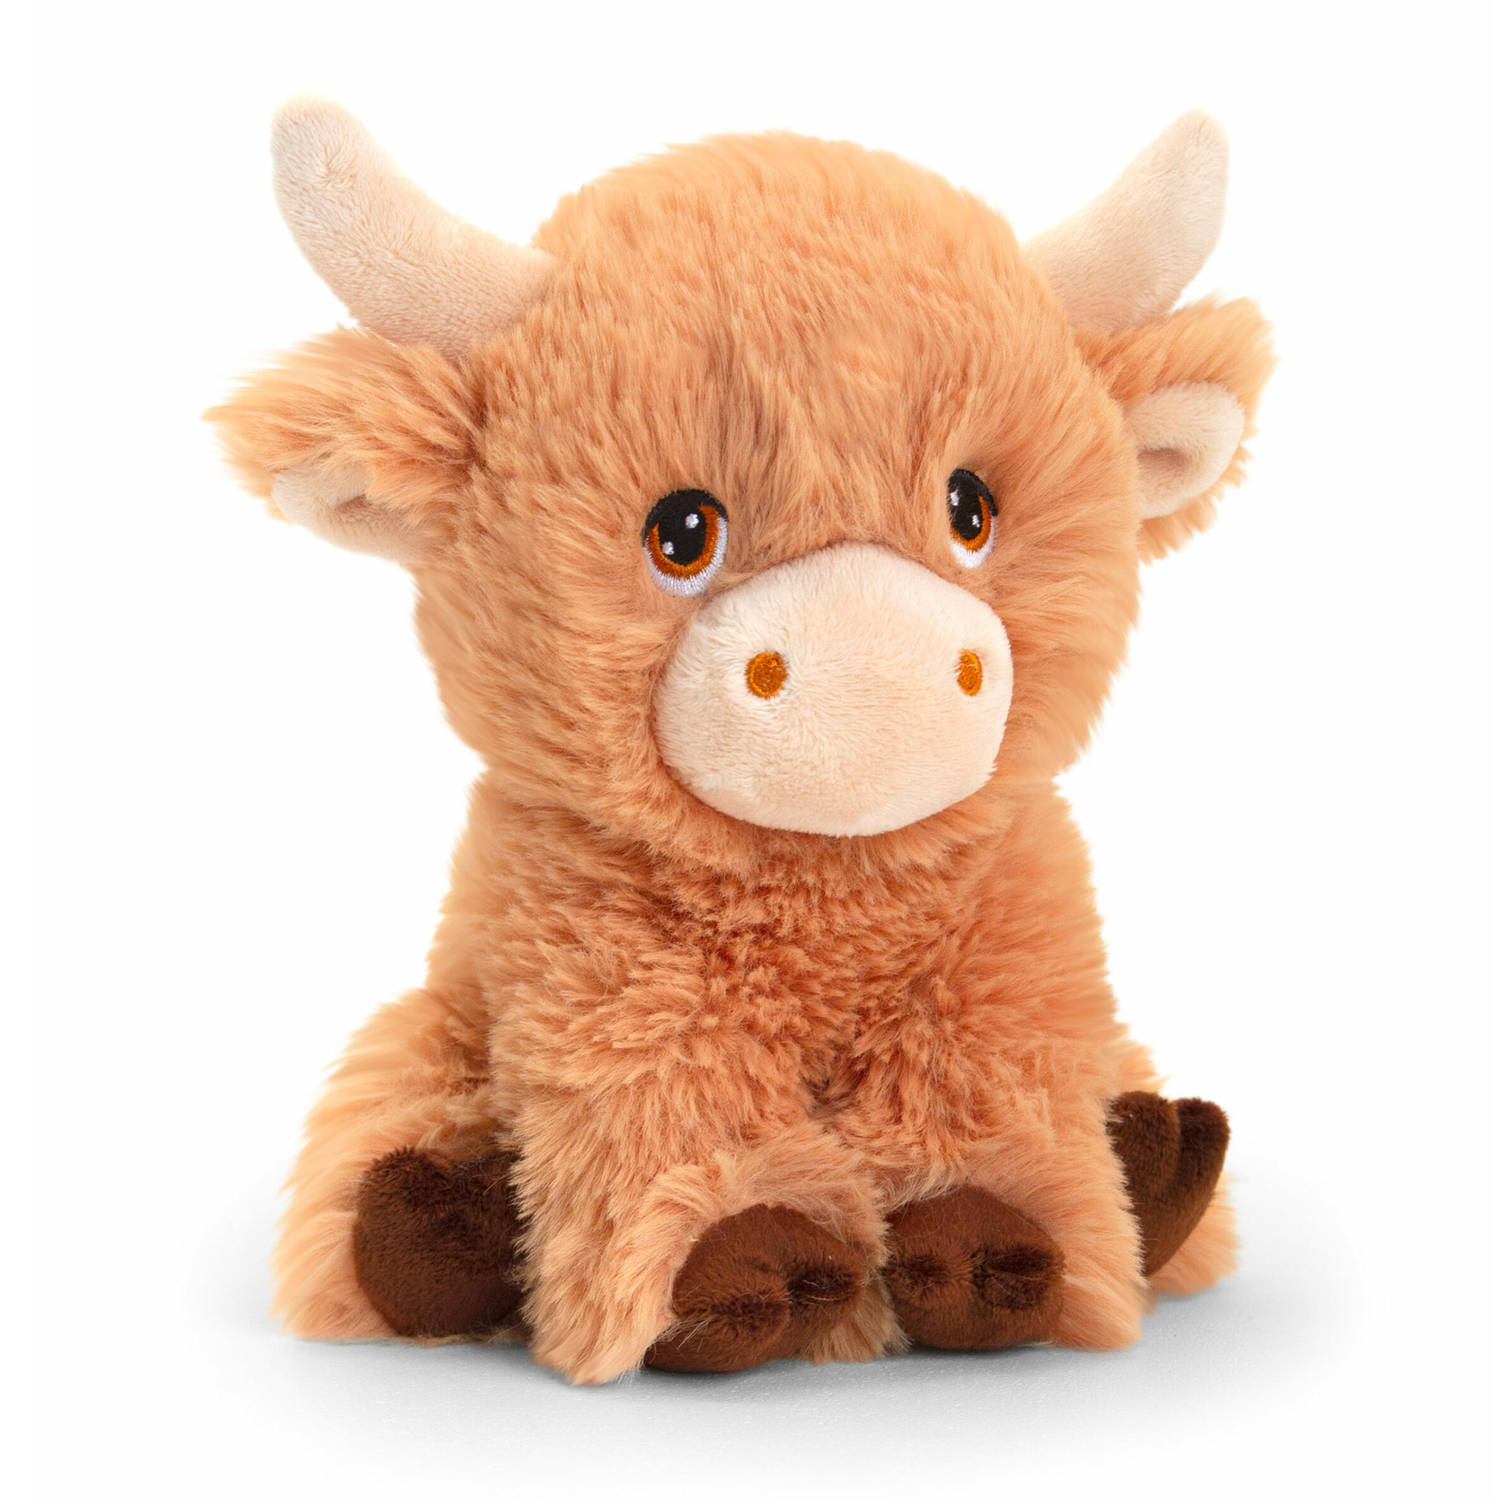 Keel Toys pluche koe met hoorns knuffeldier - bruin - zittend - 18 cm - Luxe Eco kwaliteit knuffels